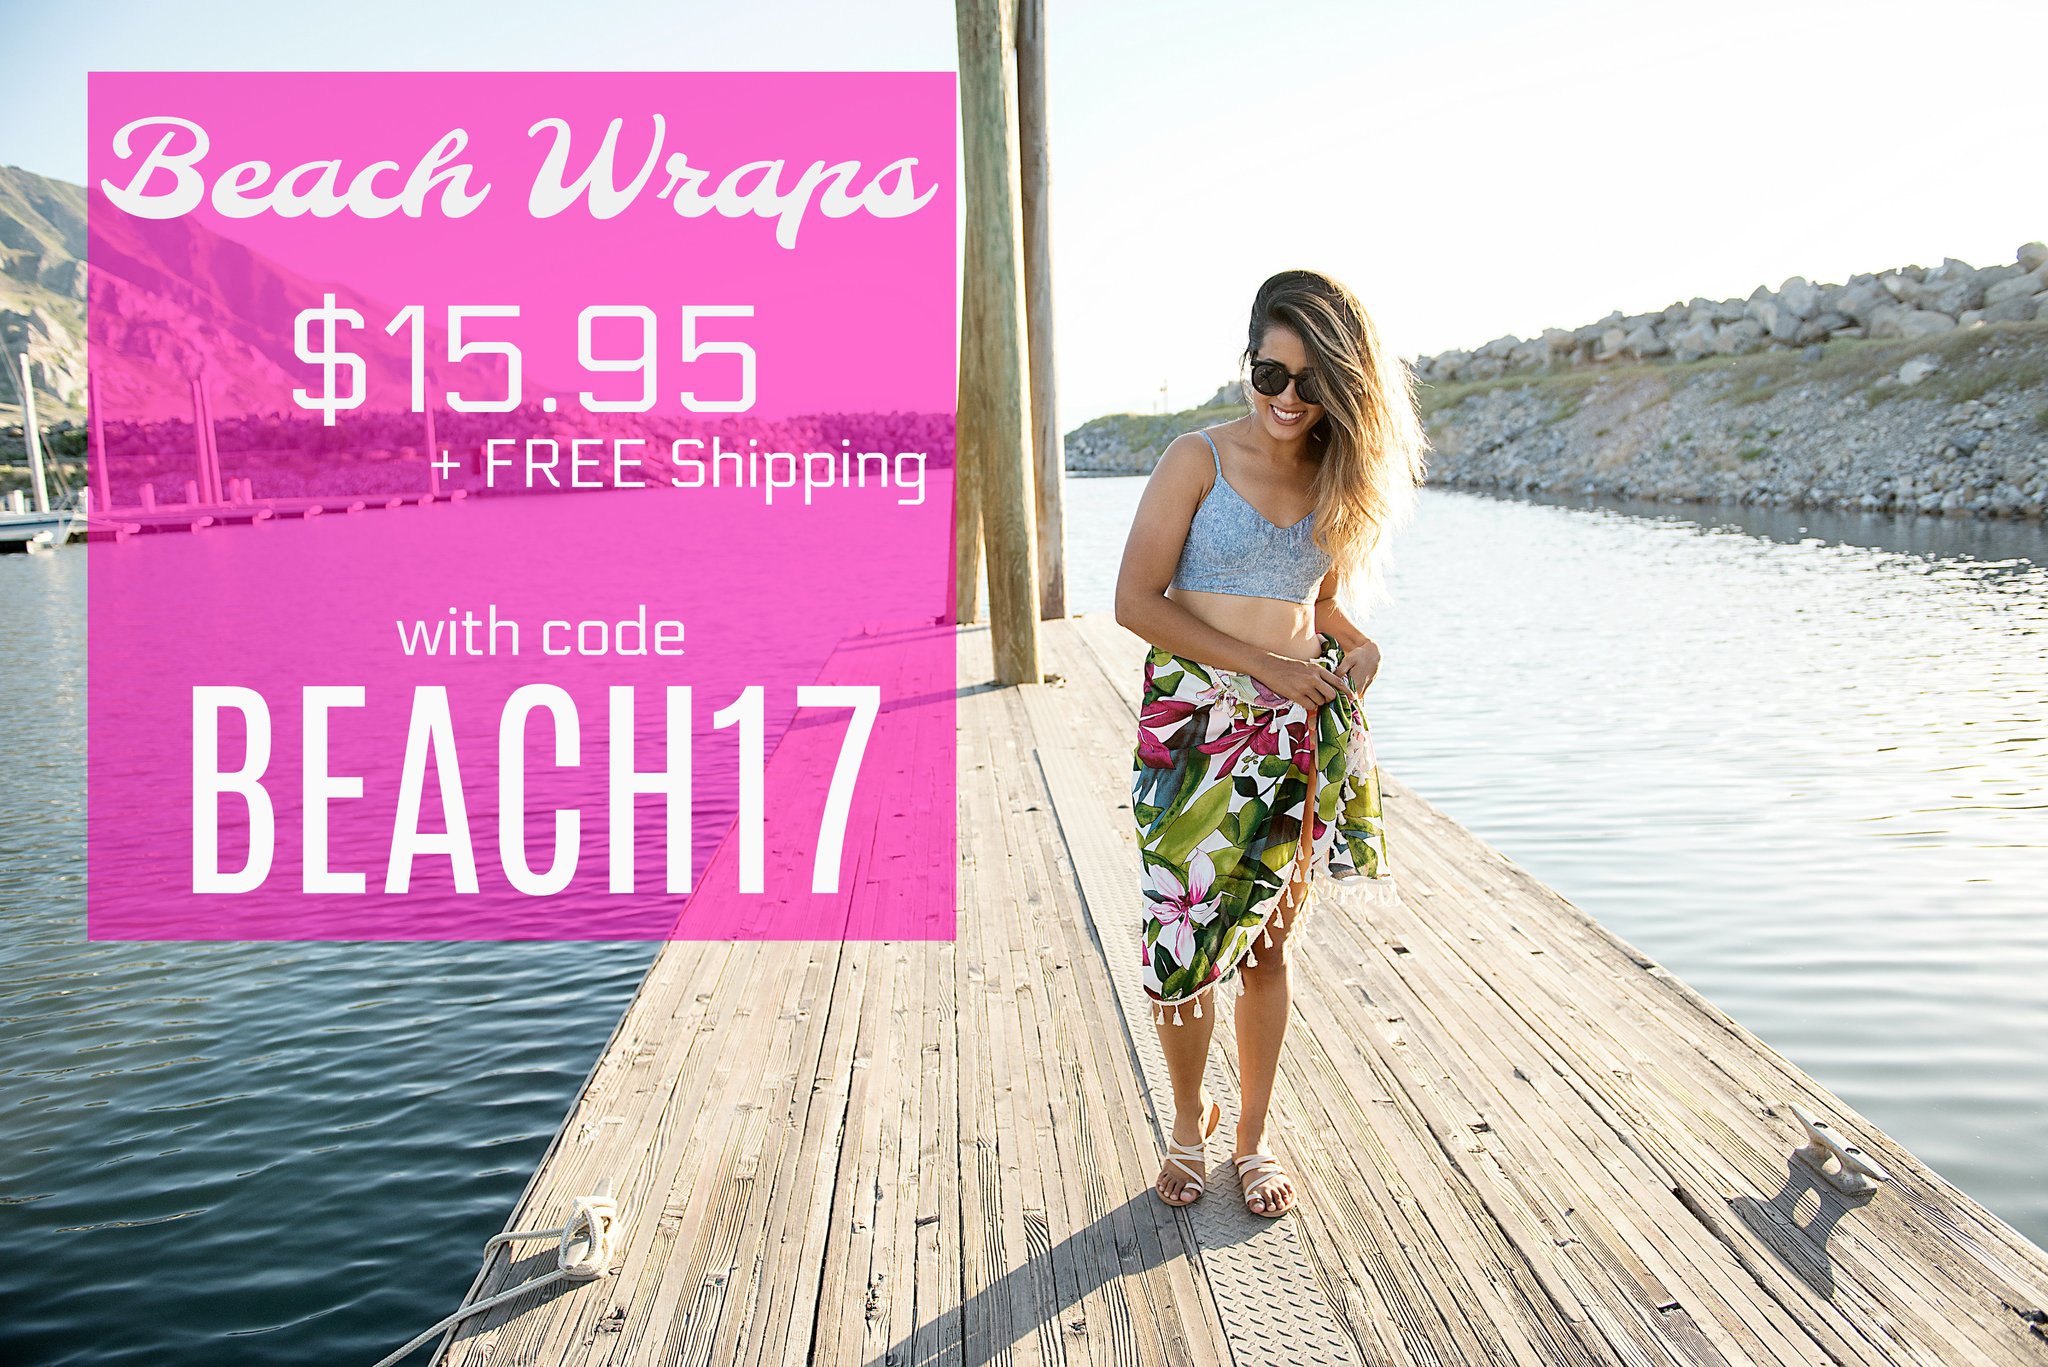 CUTE Beach Wraps for $15.95 + FREE SHIPPING!